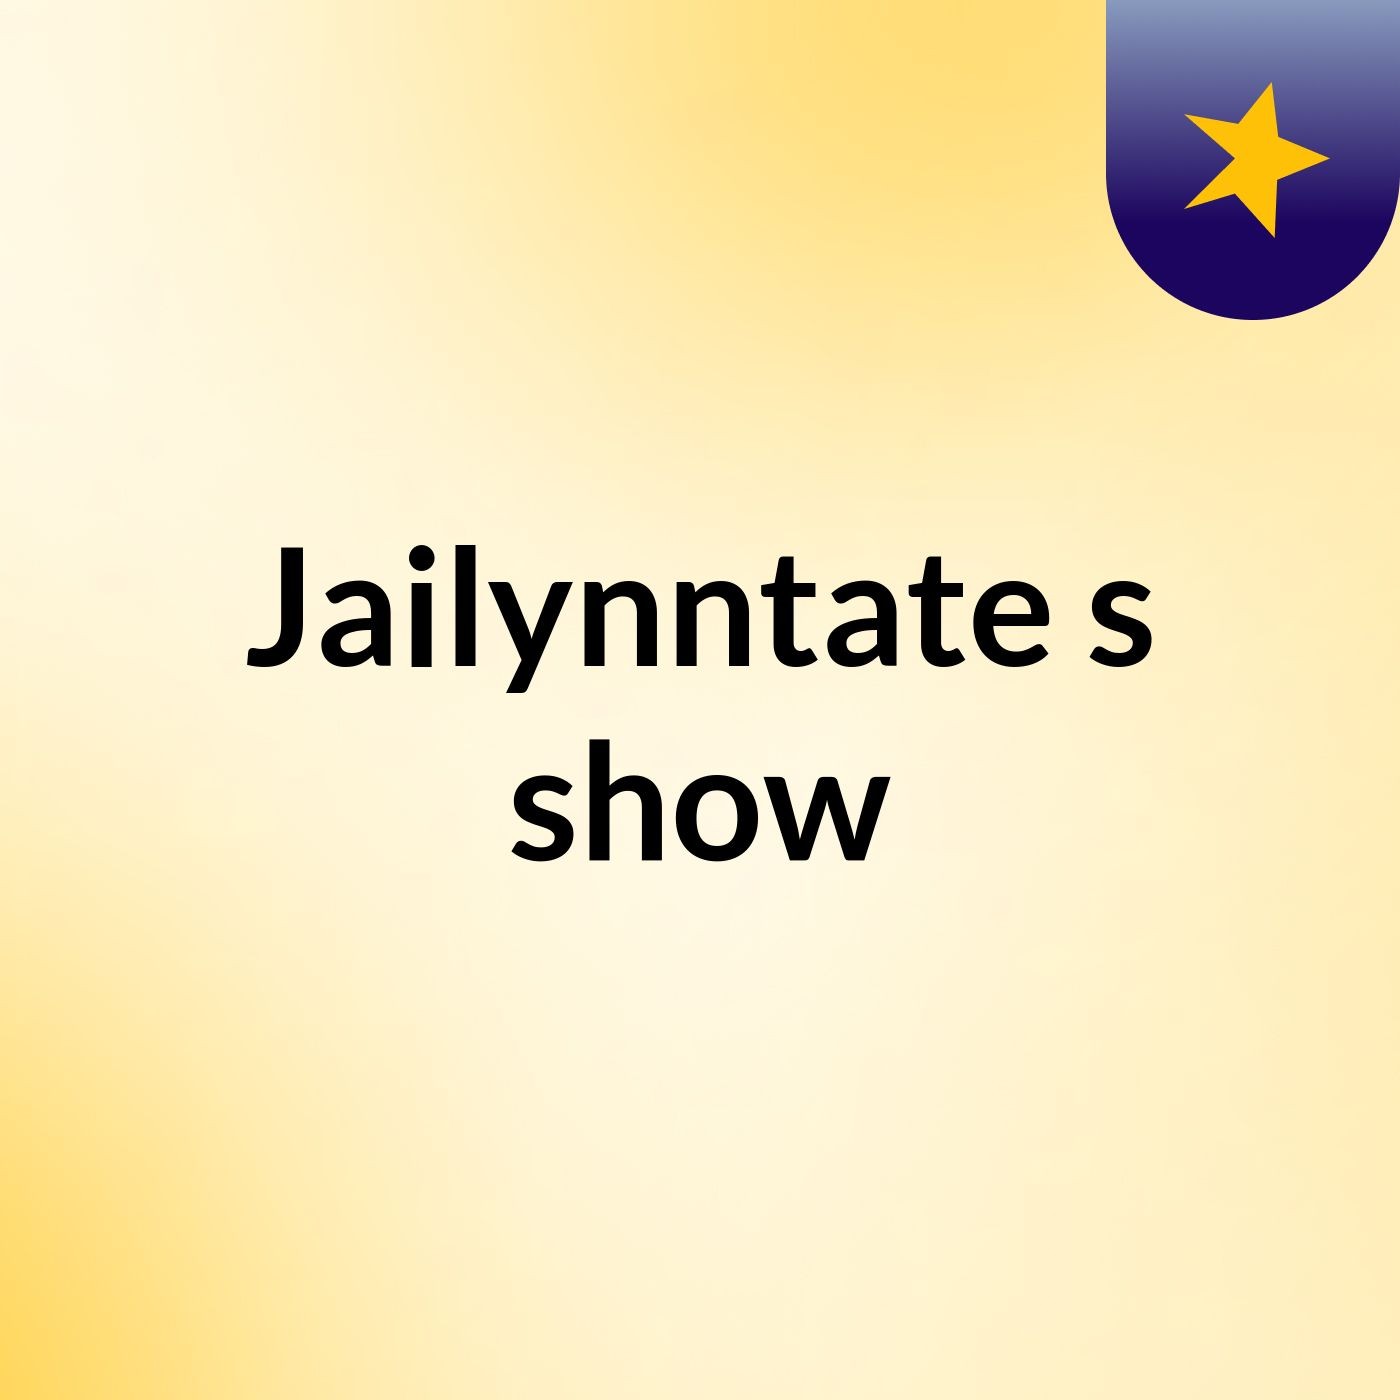 Jailynntate's show